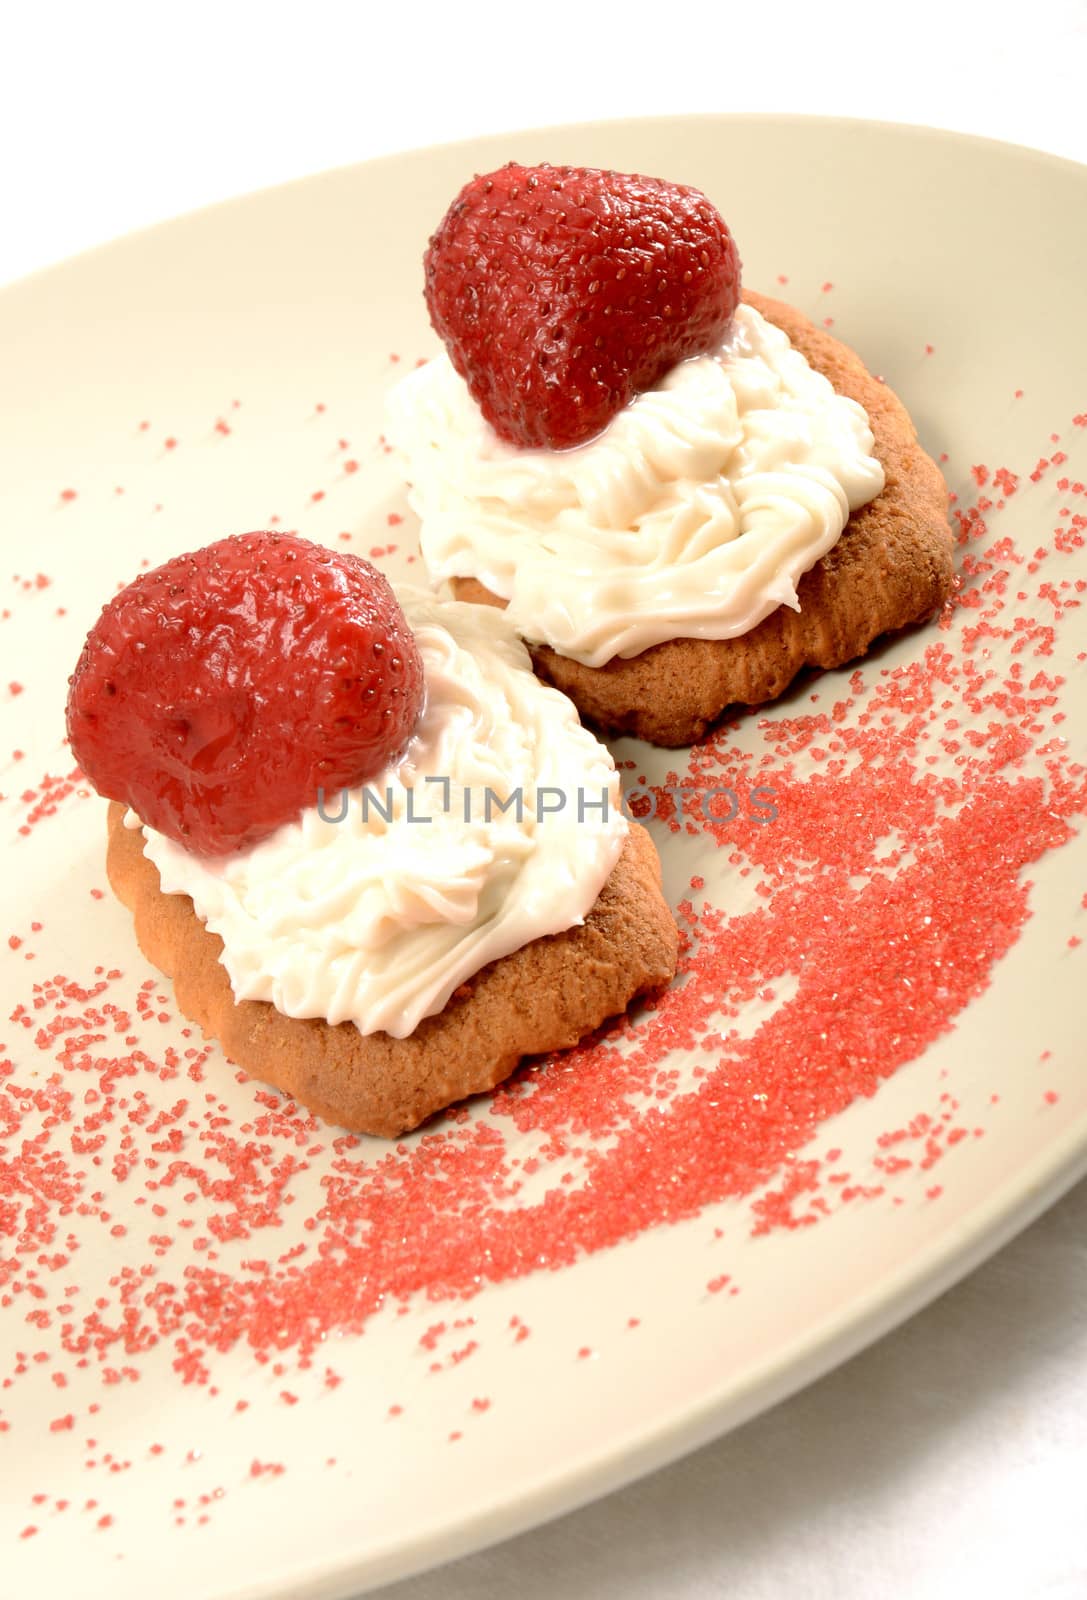 strawberry dessert by ftlaudgirl